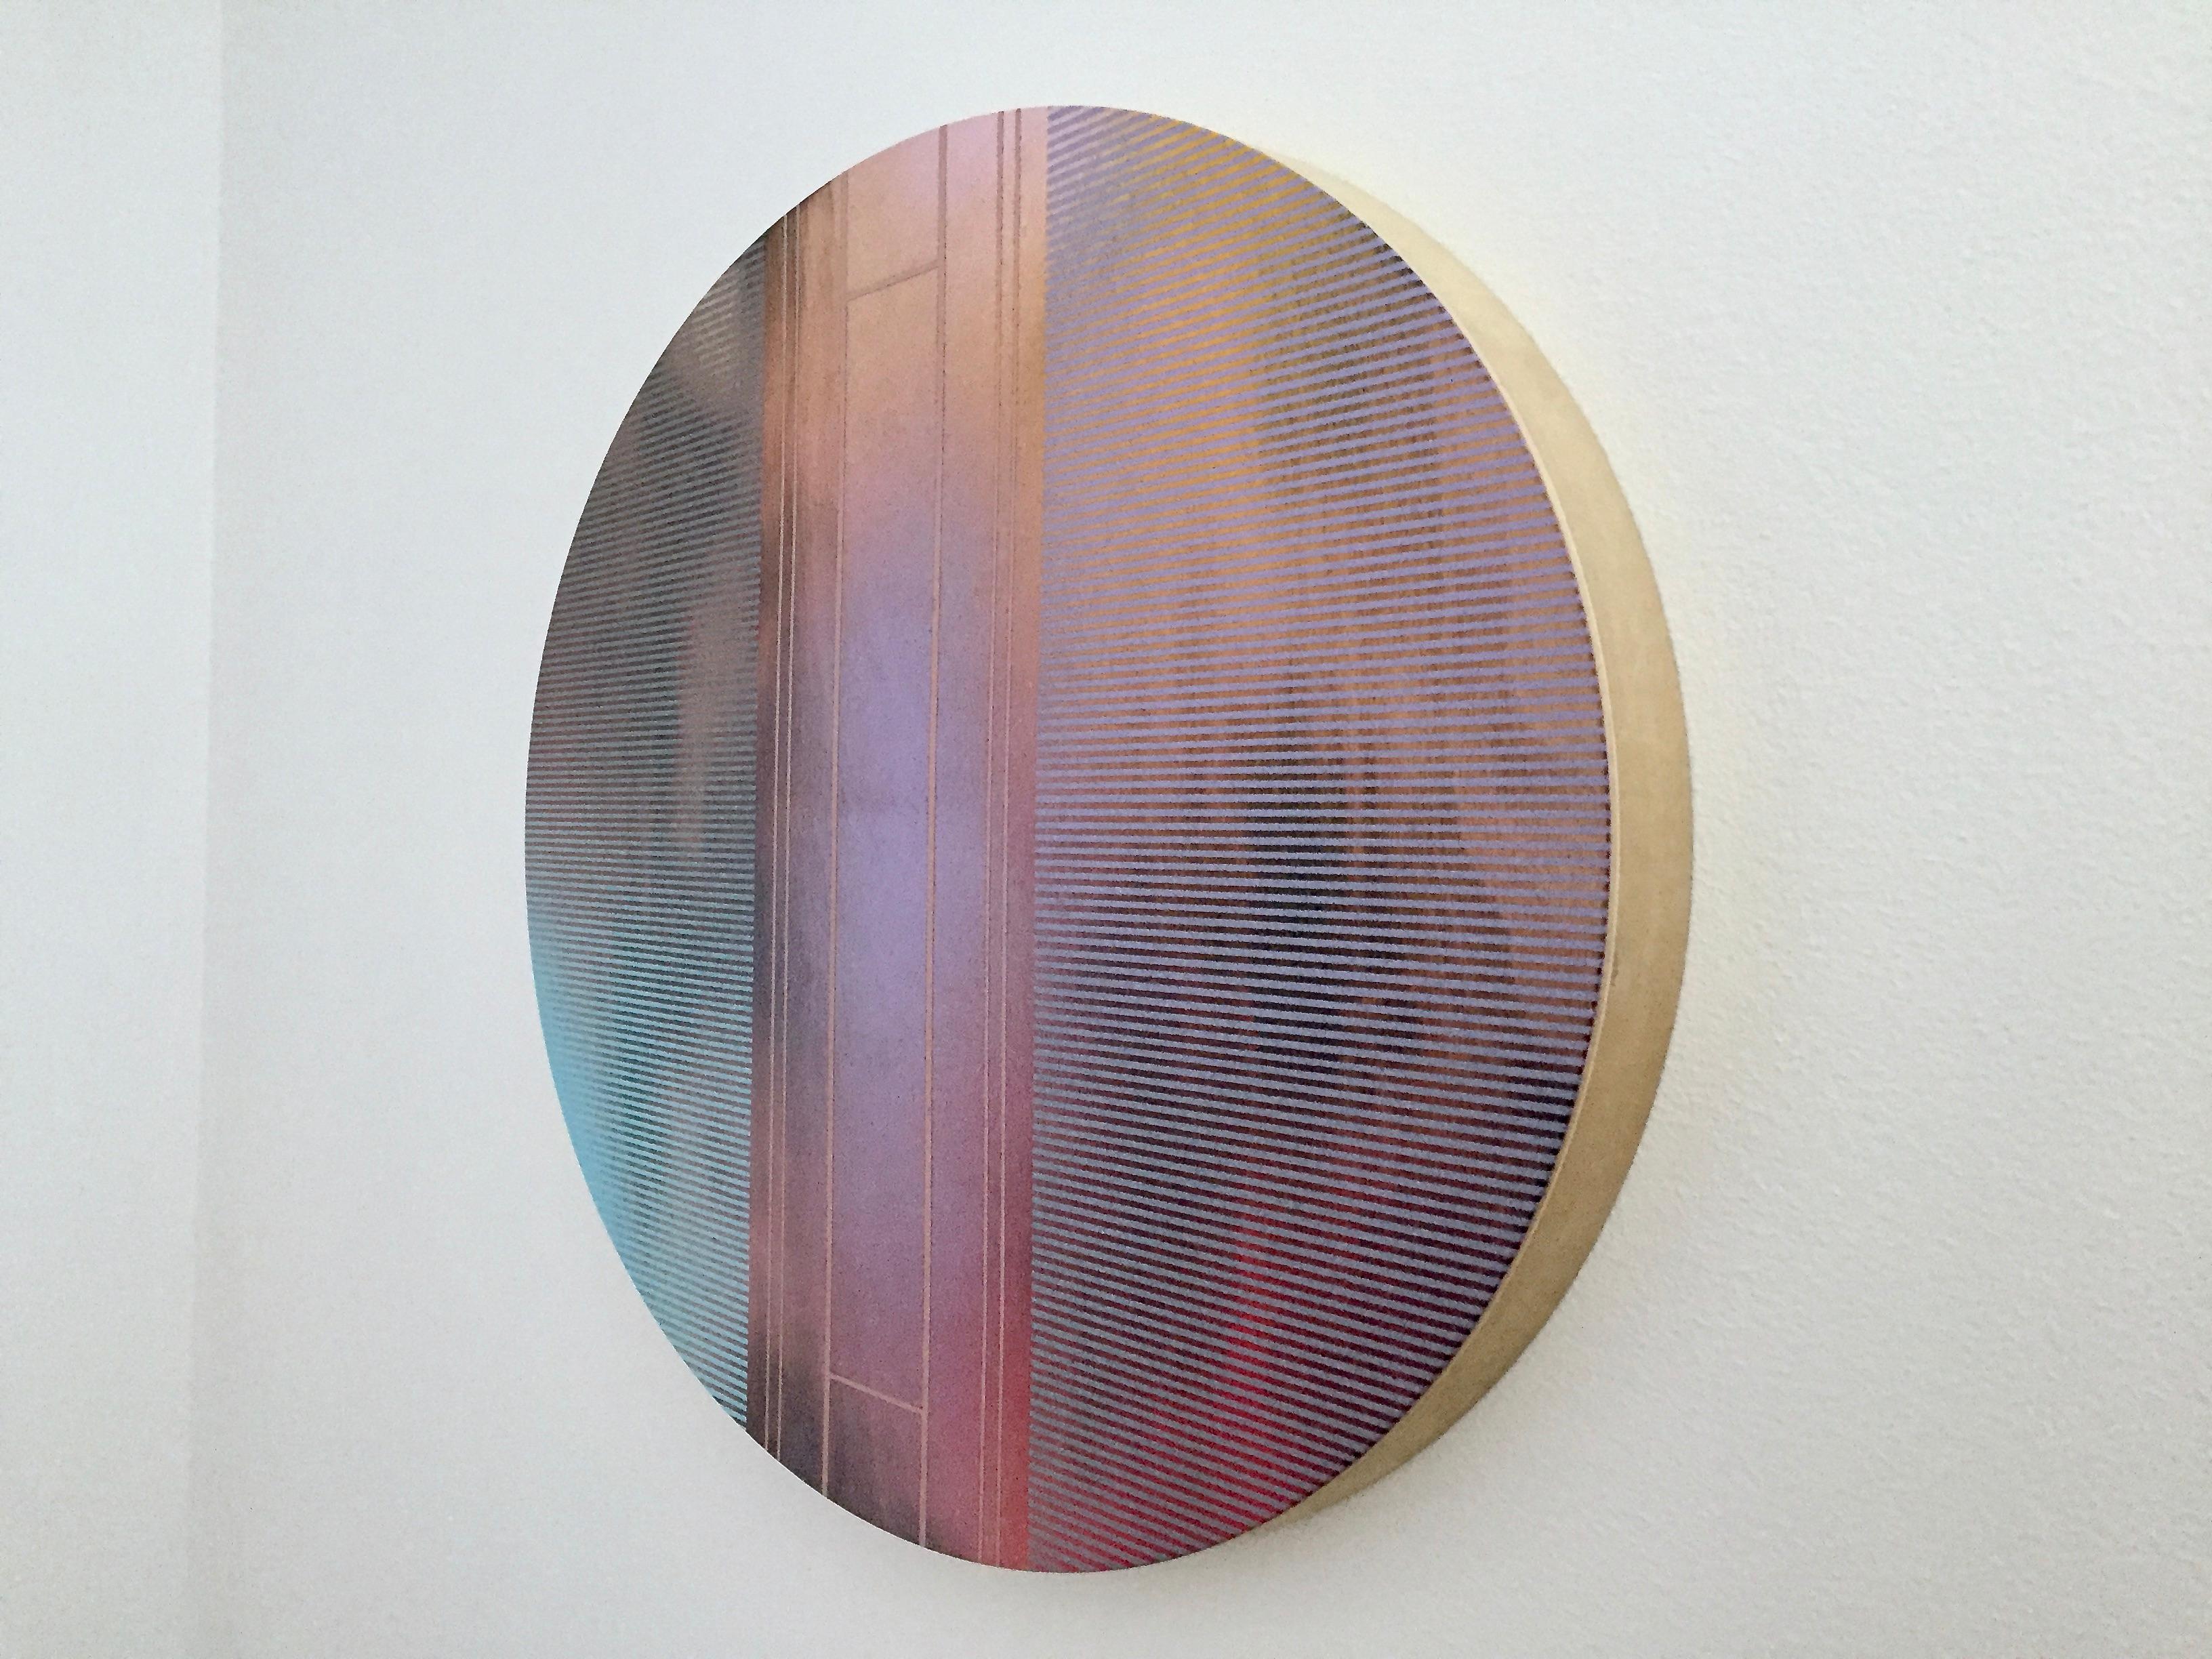 Mangata 53 Oval (circular tondo panel gold grid abstract wood Art Deco op art) - Abstract Geometric Painting by Melisa Taylor Metzger